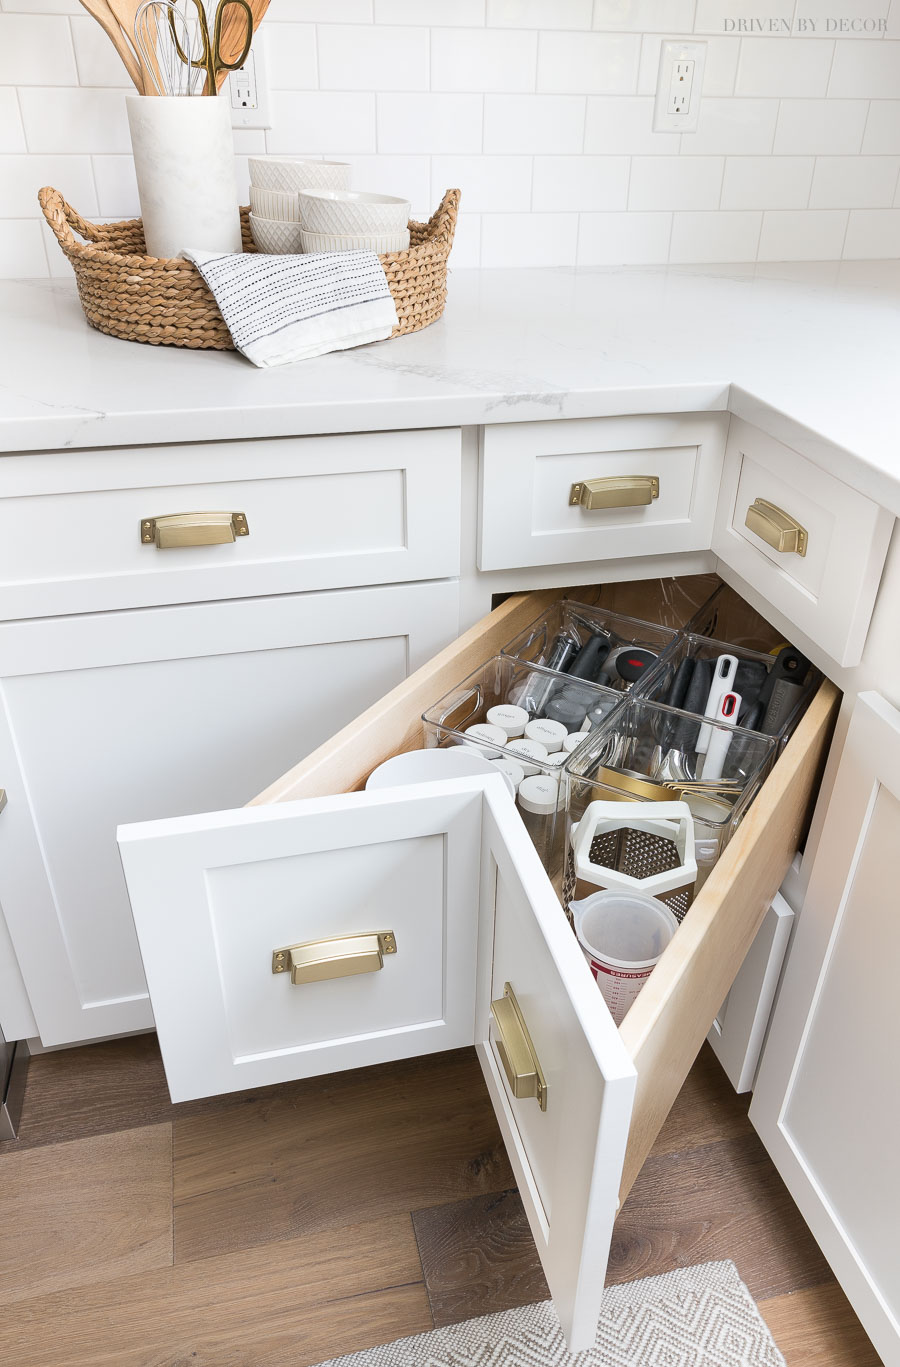 Cabinet Storage Organization Ideas From Our New Kitchen